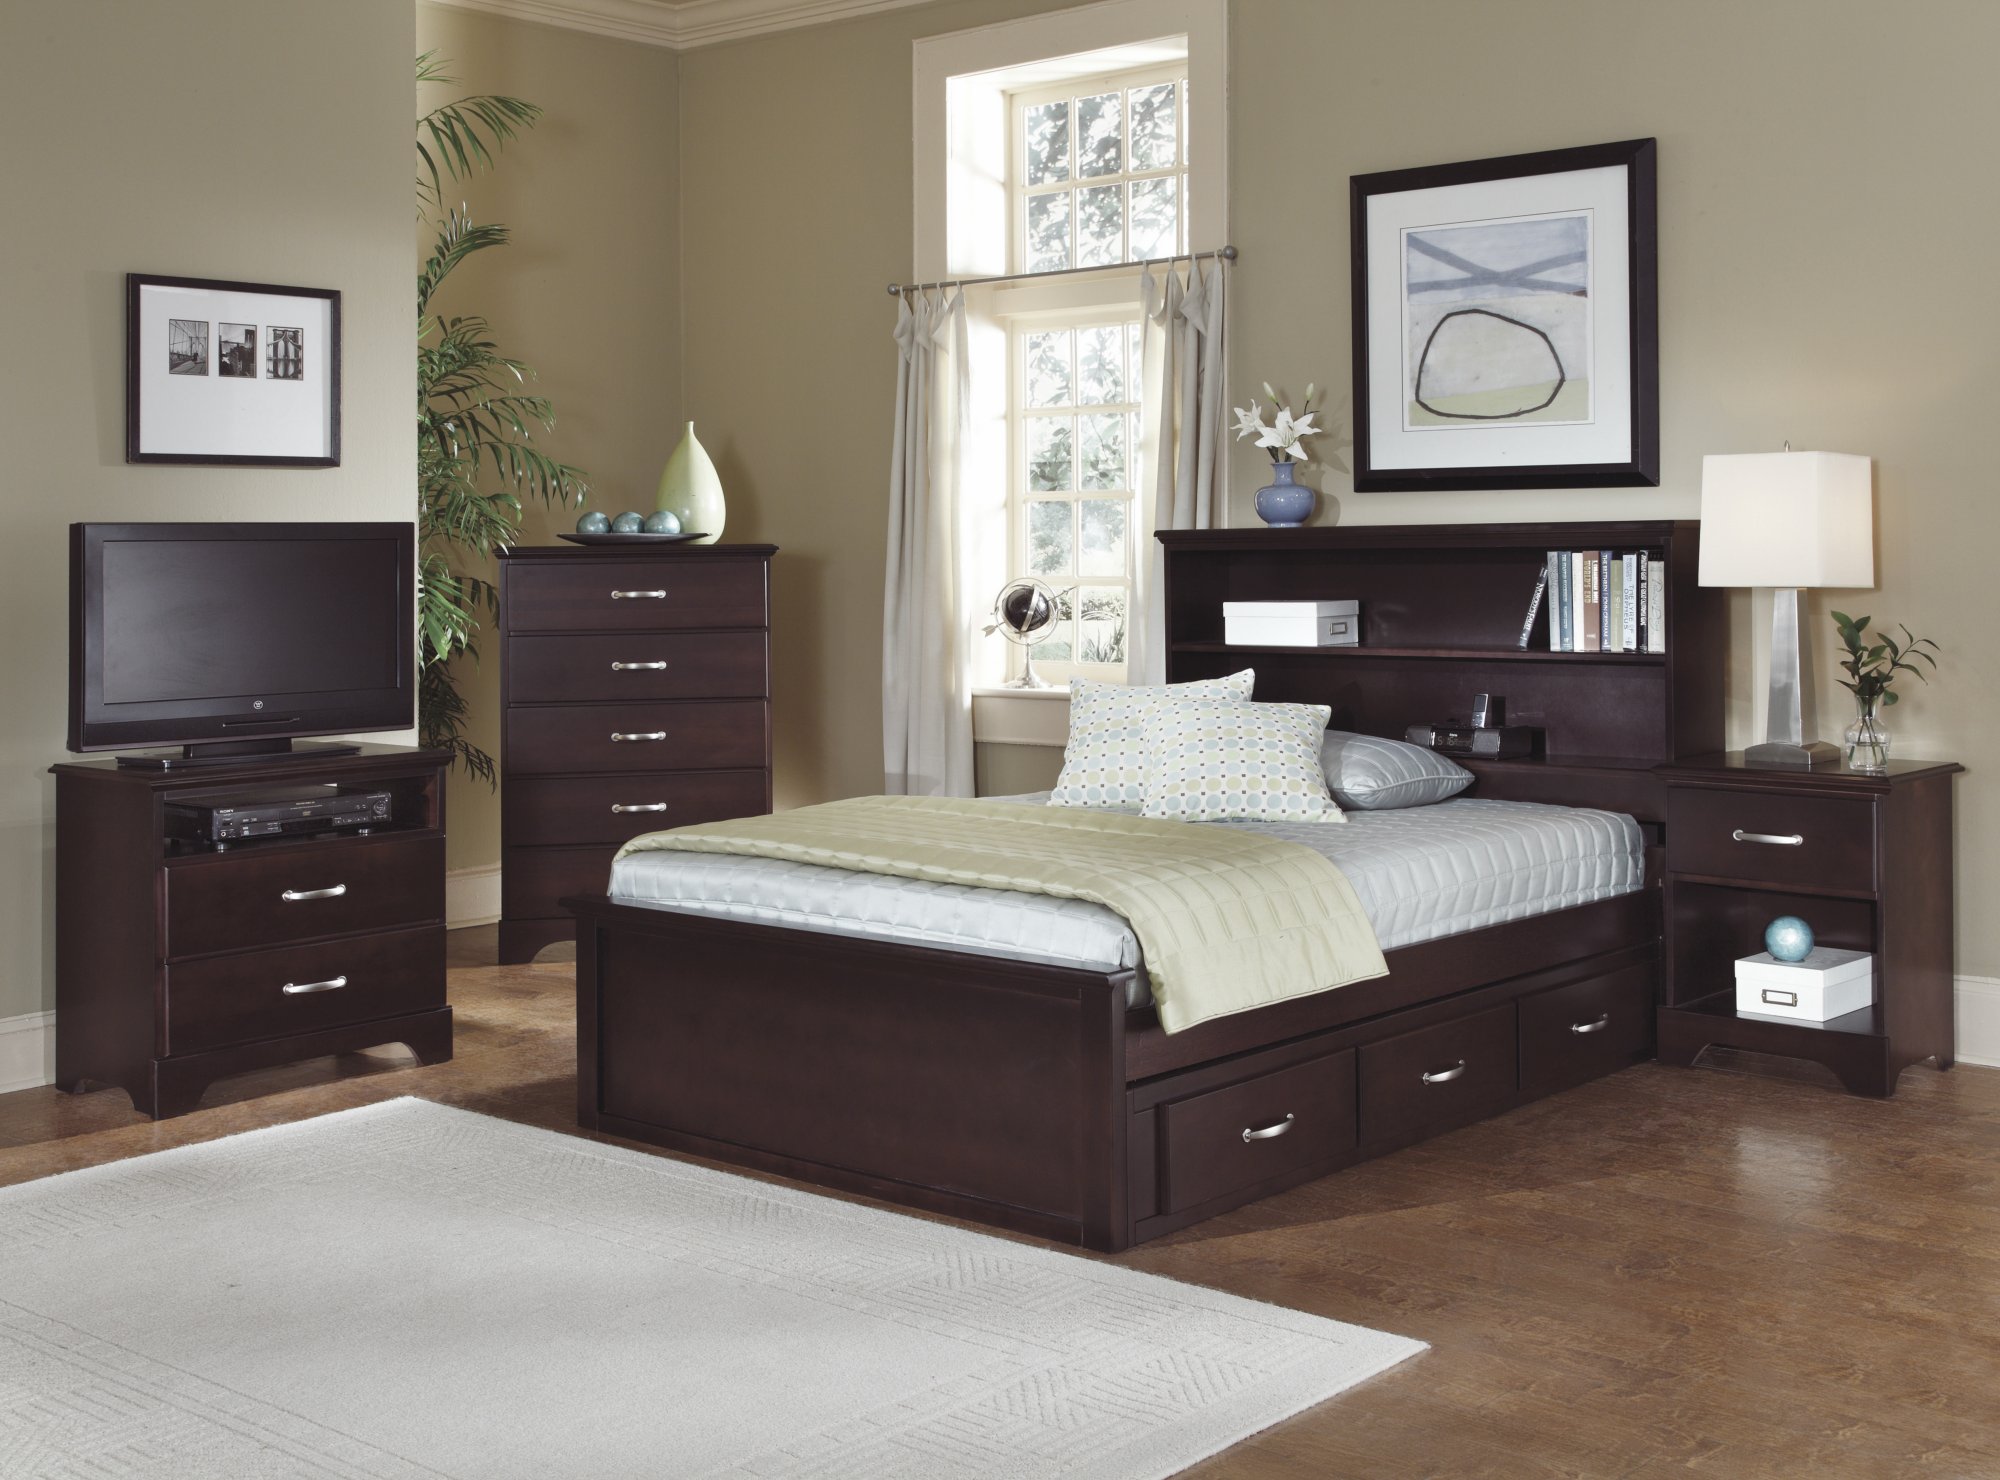 signature series bedroom furniture